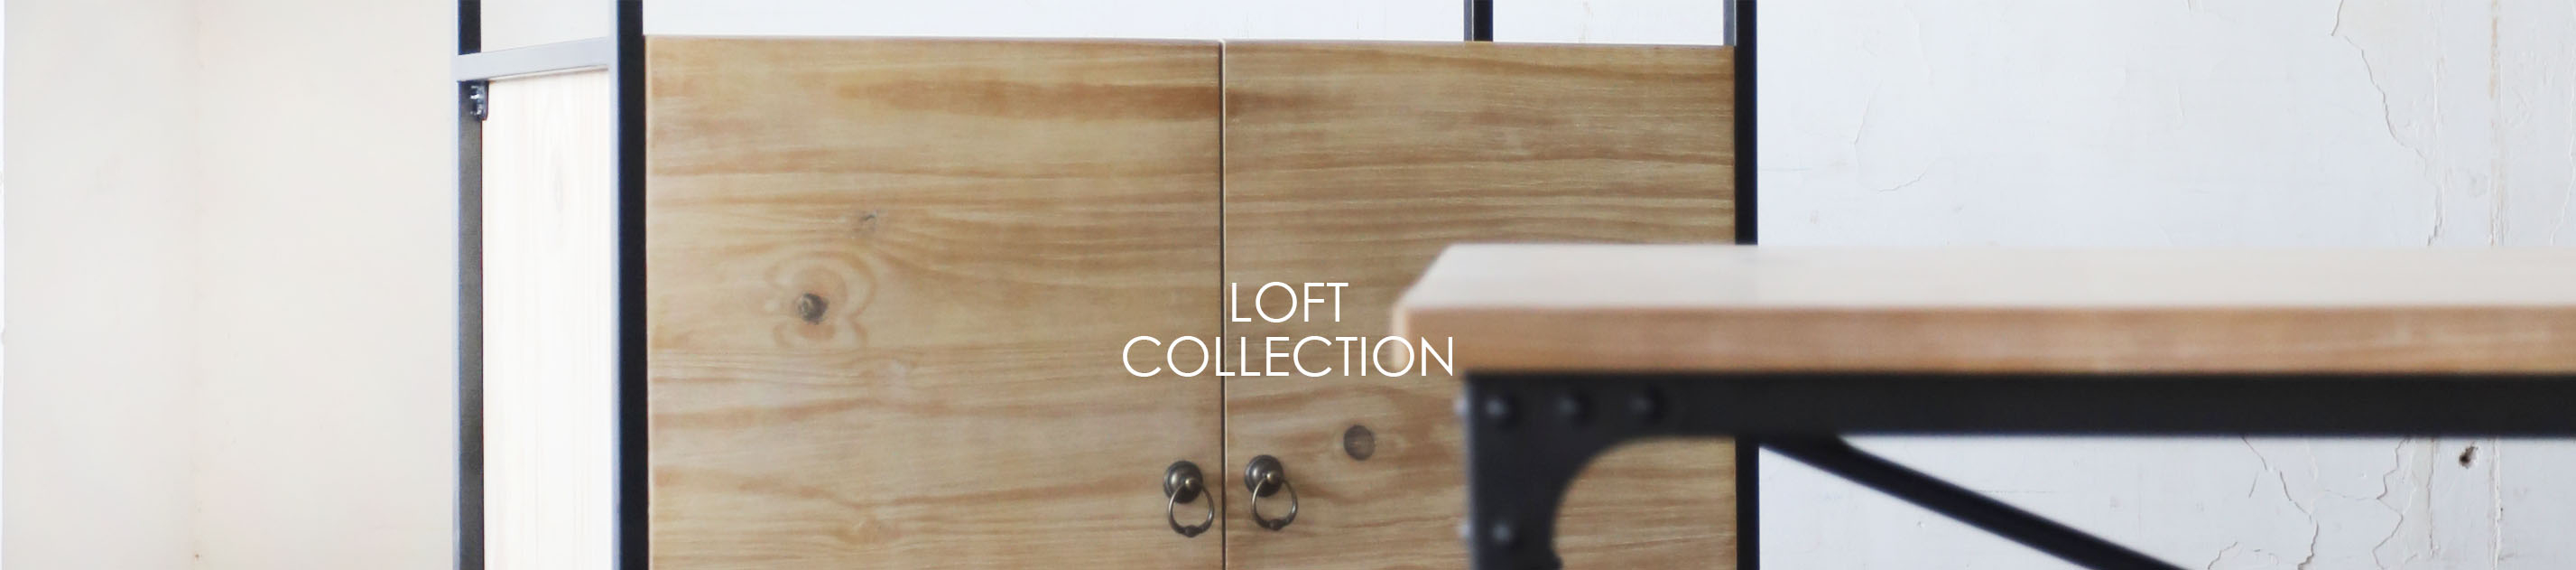 Loft Collection